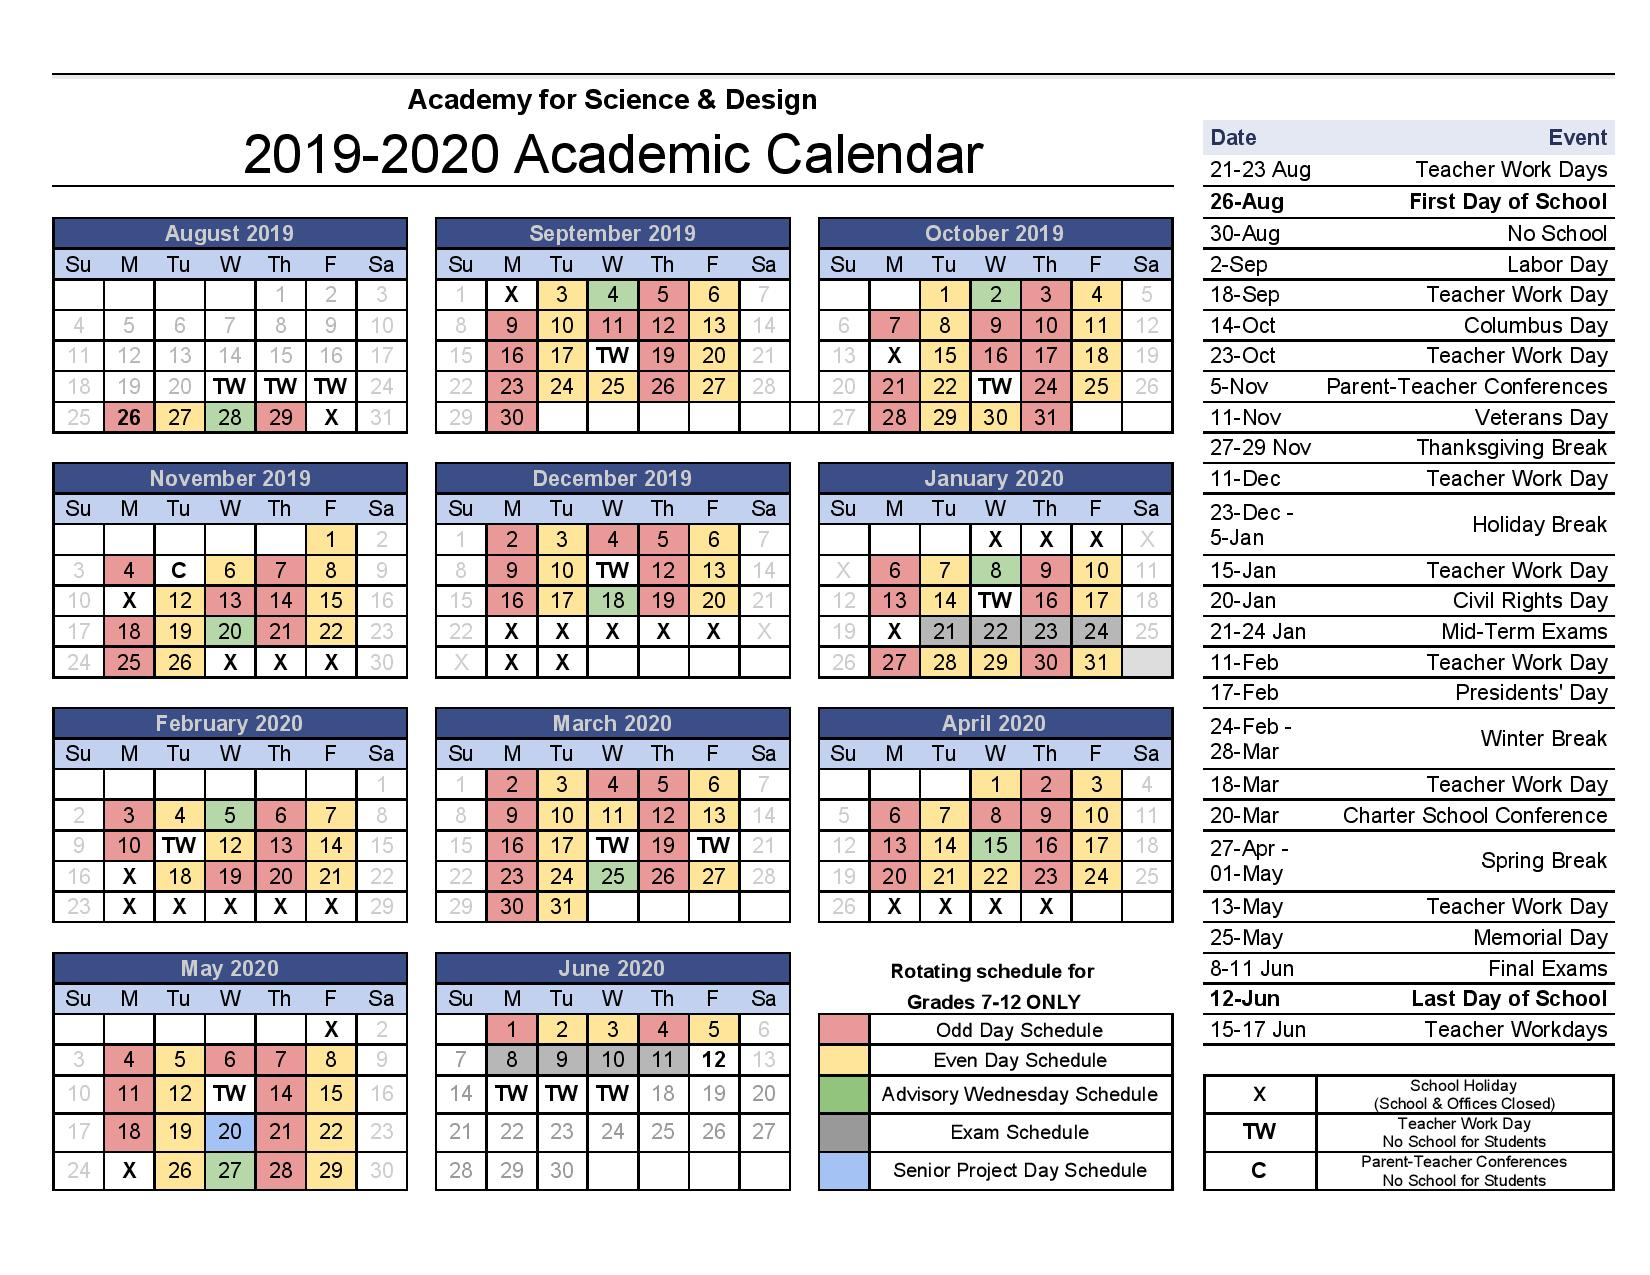 Uc Berkeley 2019 2020 Academic Calendar Calendar Inspiration Design